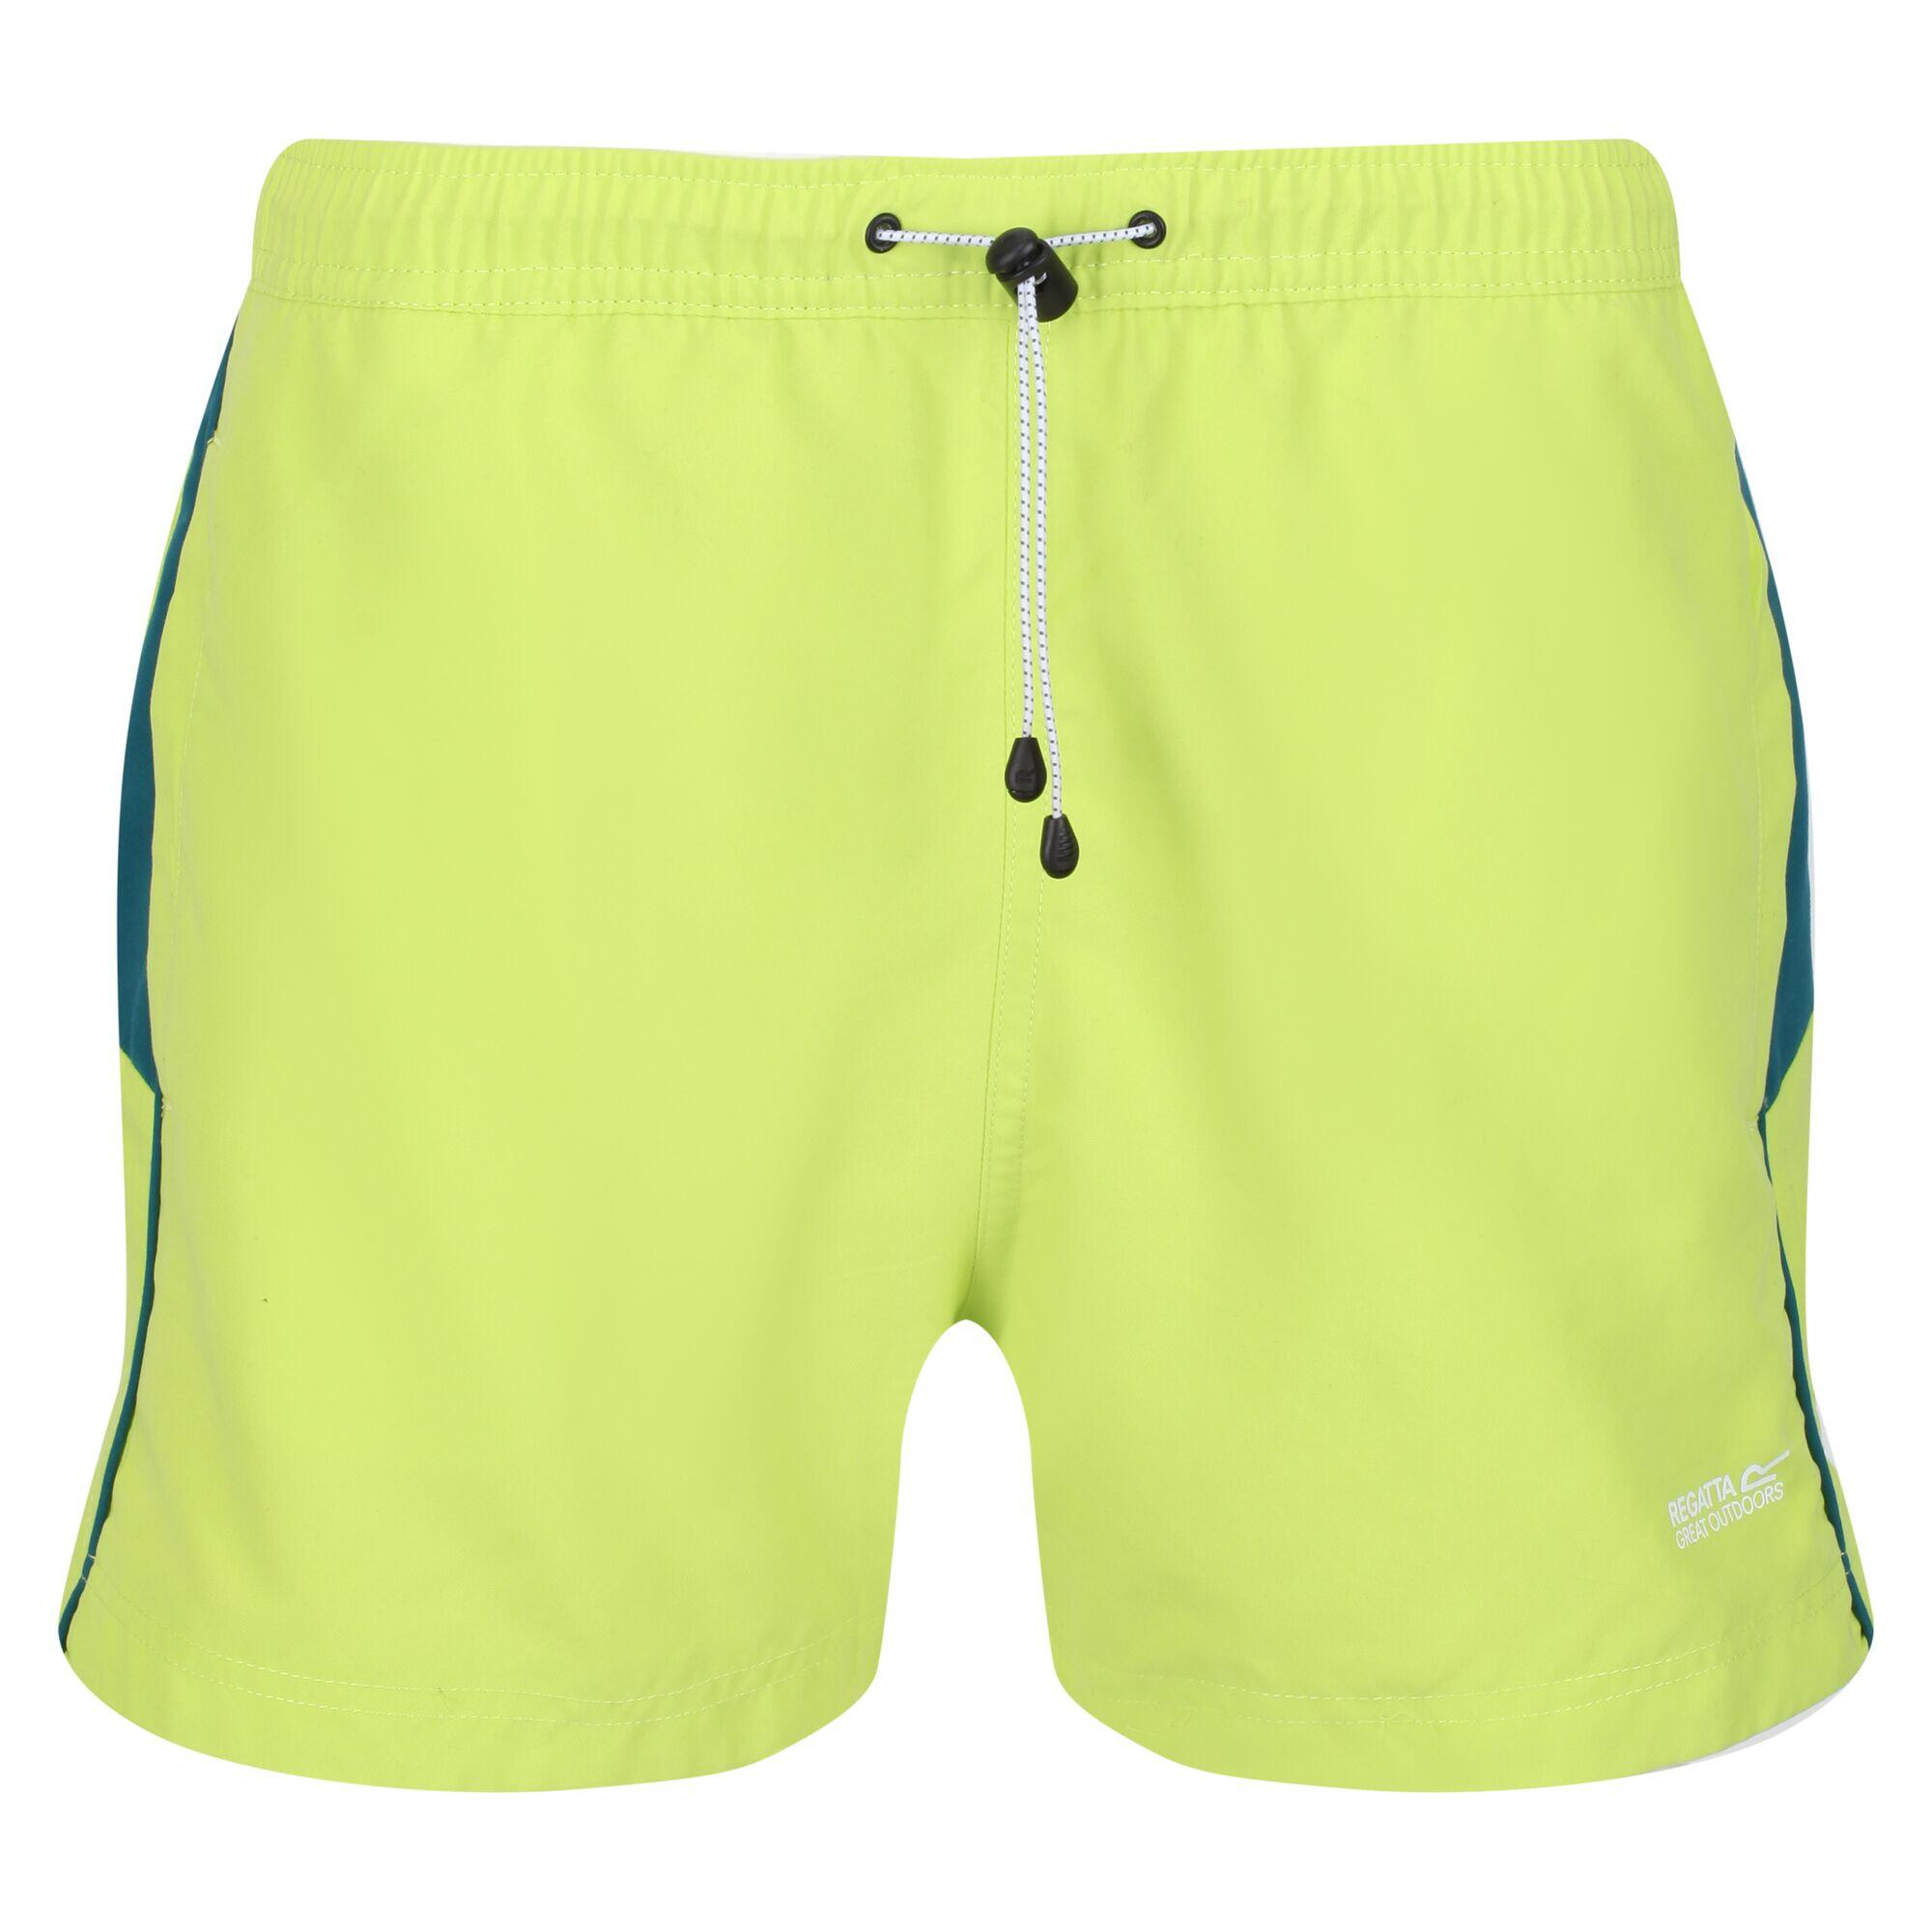 Mens Rehere Shorts (Bright Kiwi/Pacific Green) 1/5